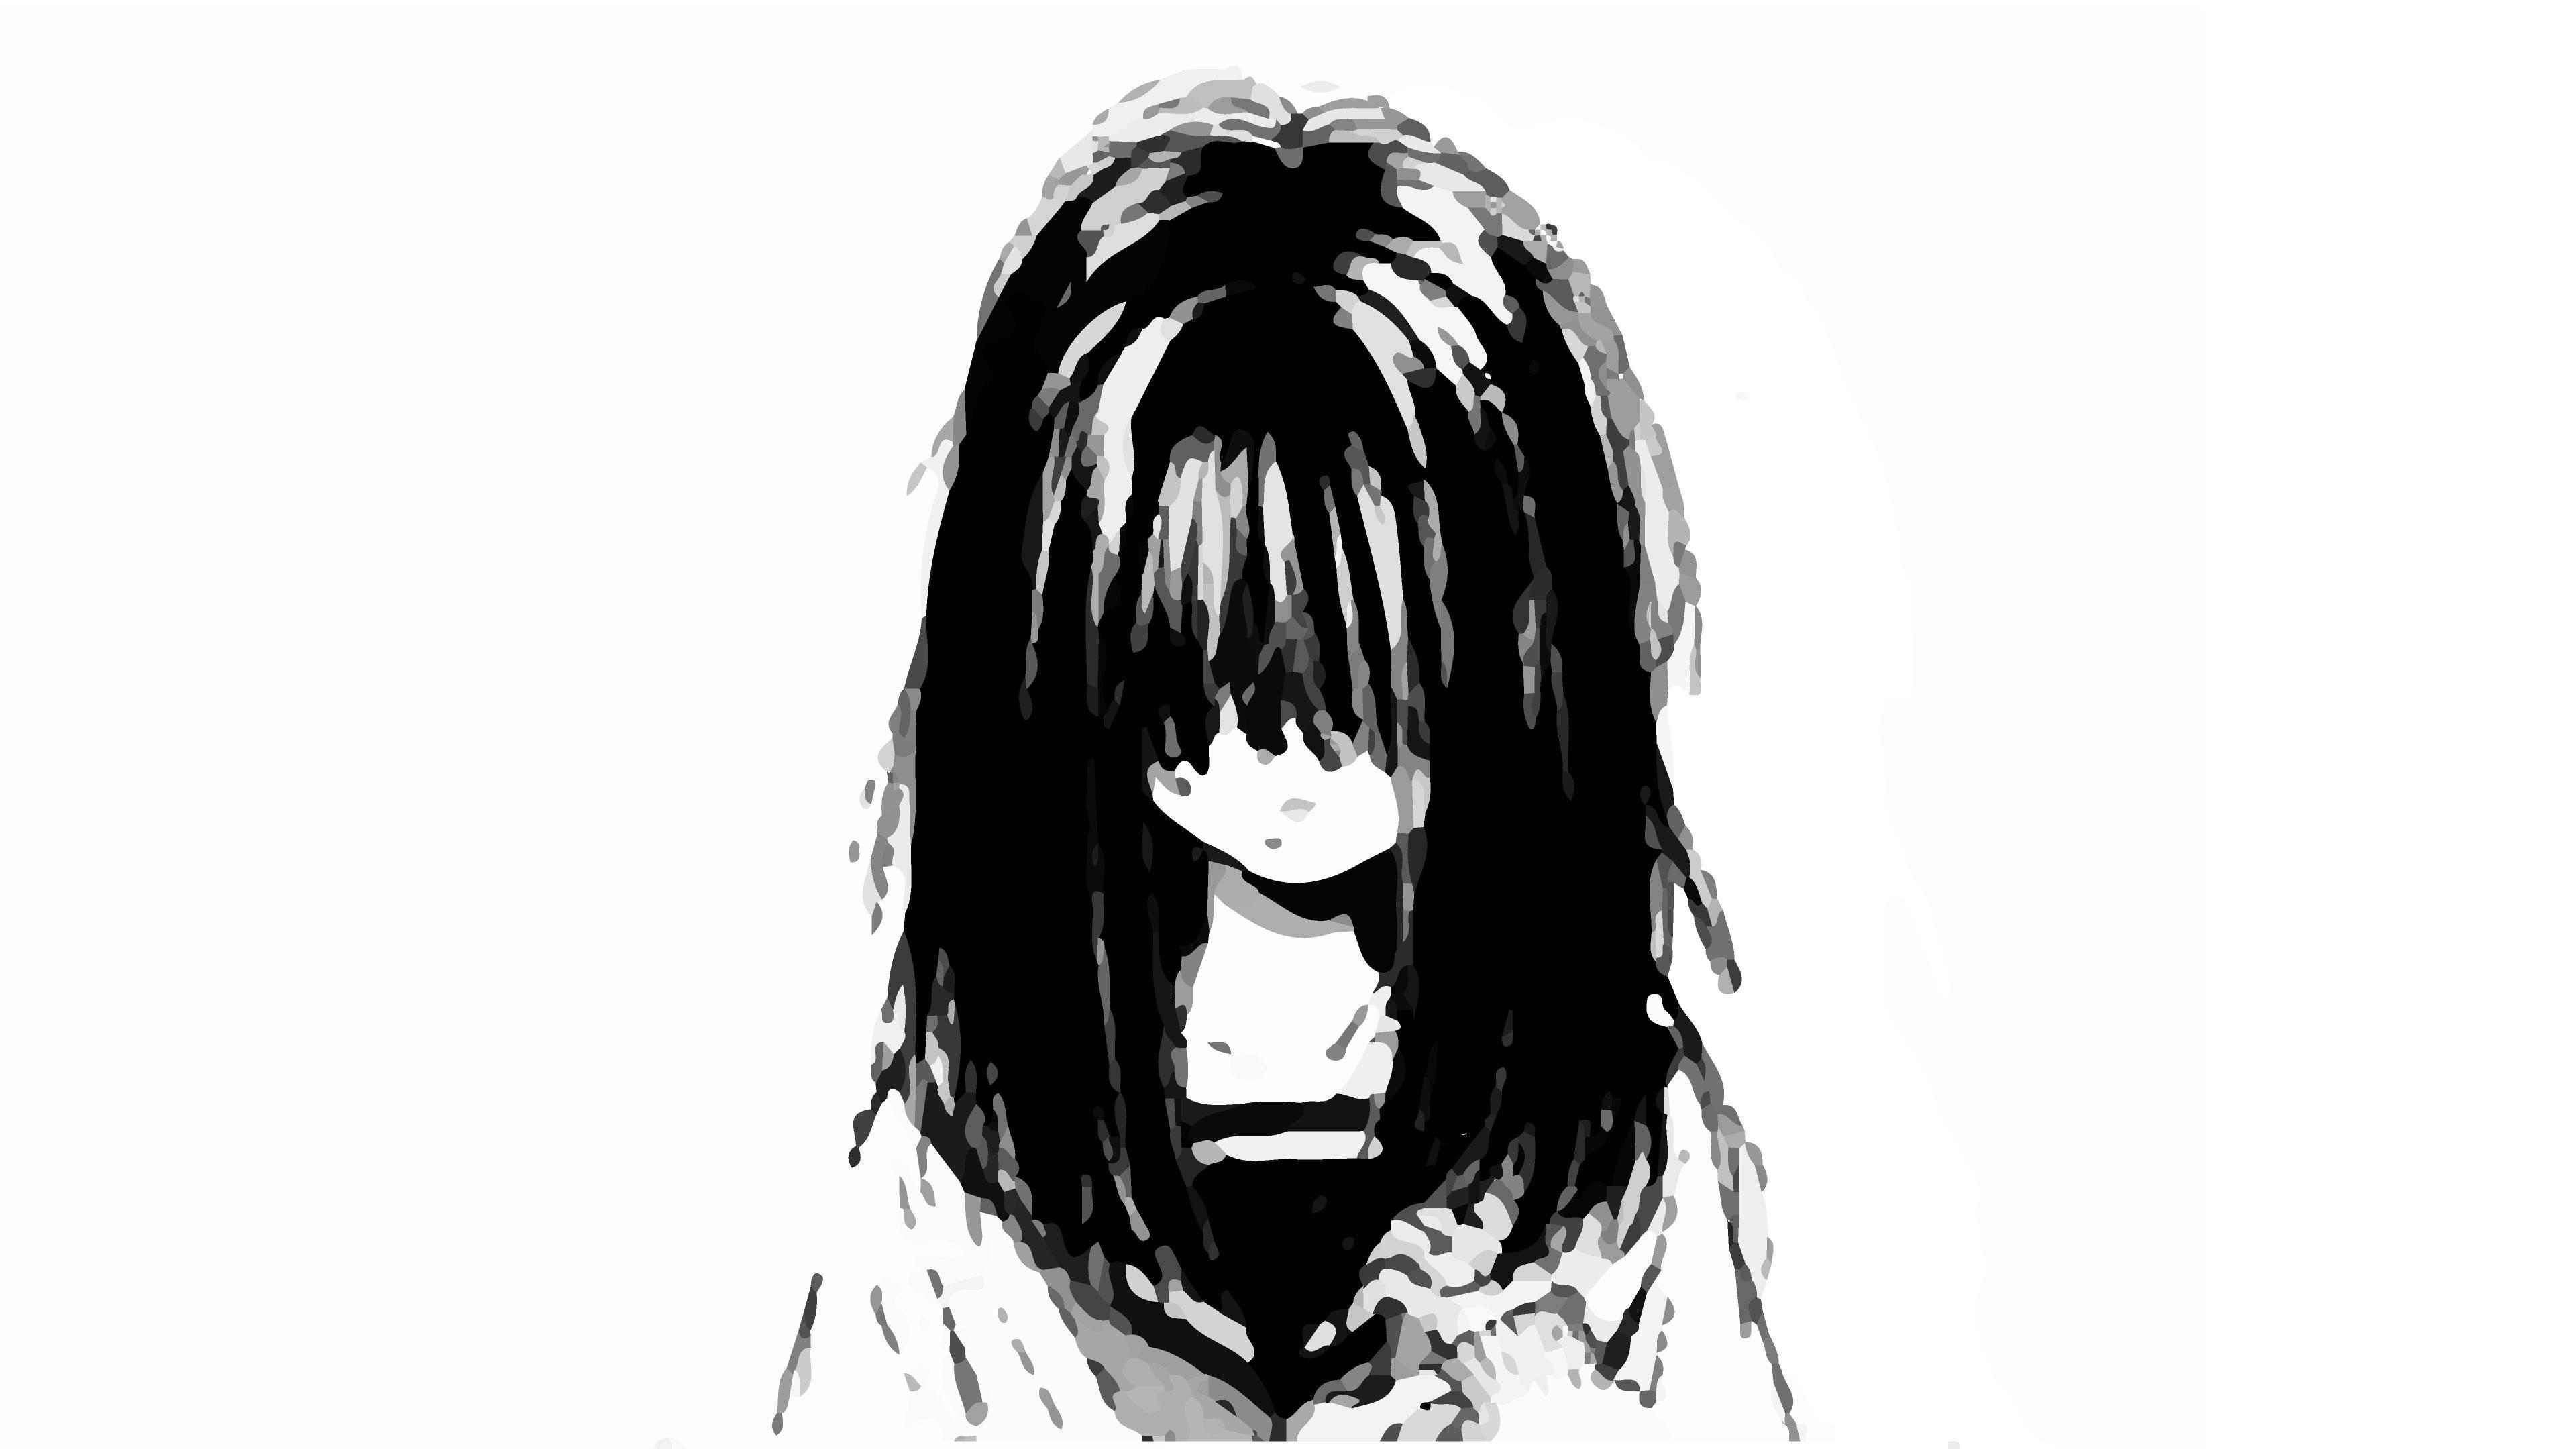 Aesthetic Sad Anime Girl Wallpapers Top Free Aesthetic Sad Anime Girl